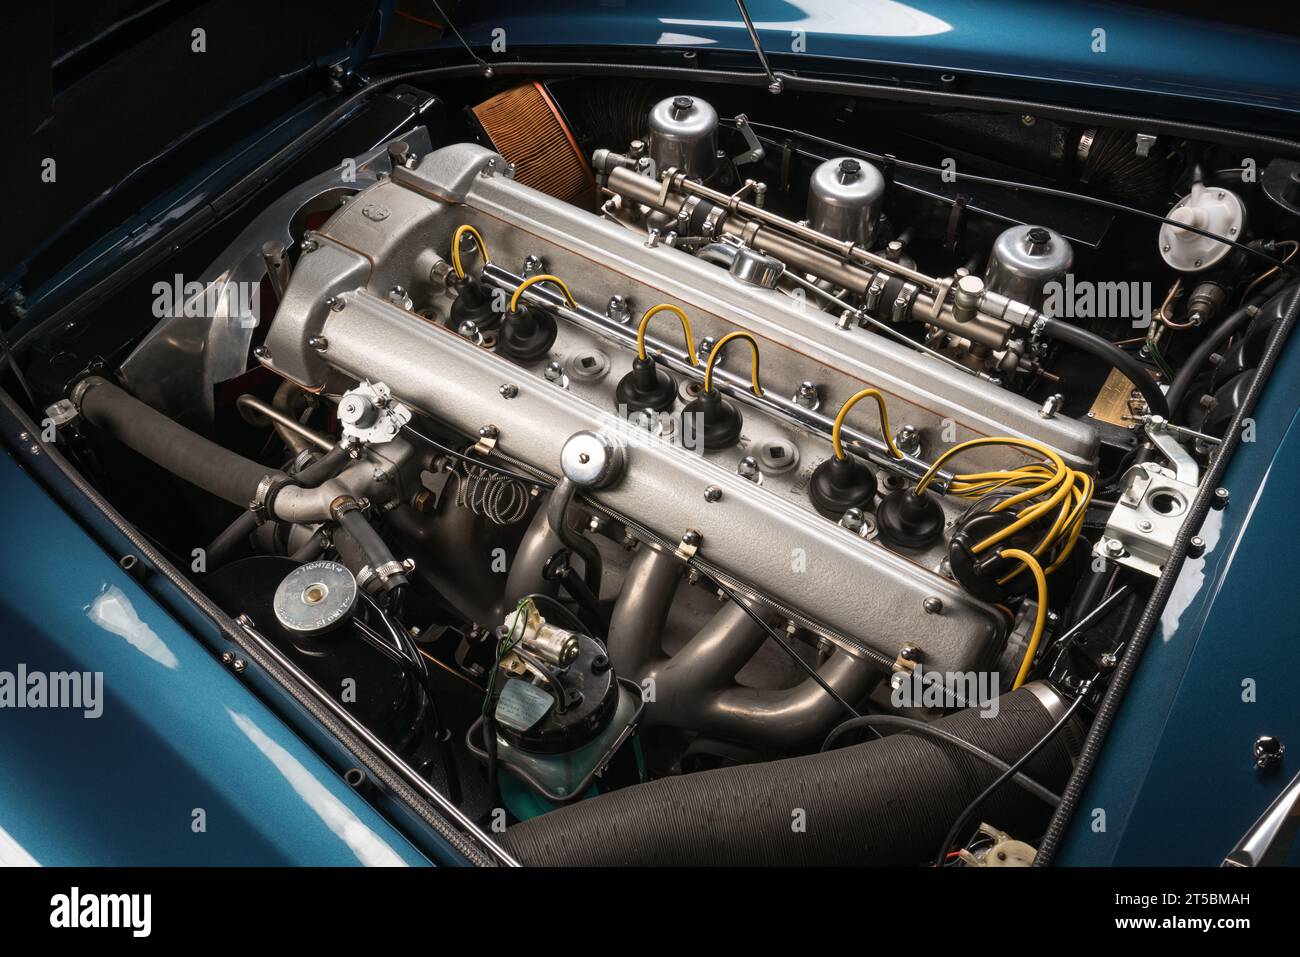 1965 Aston Martin DB5, engine view, pristine condition Stock Photo